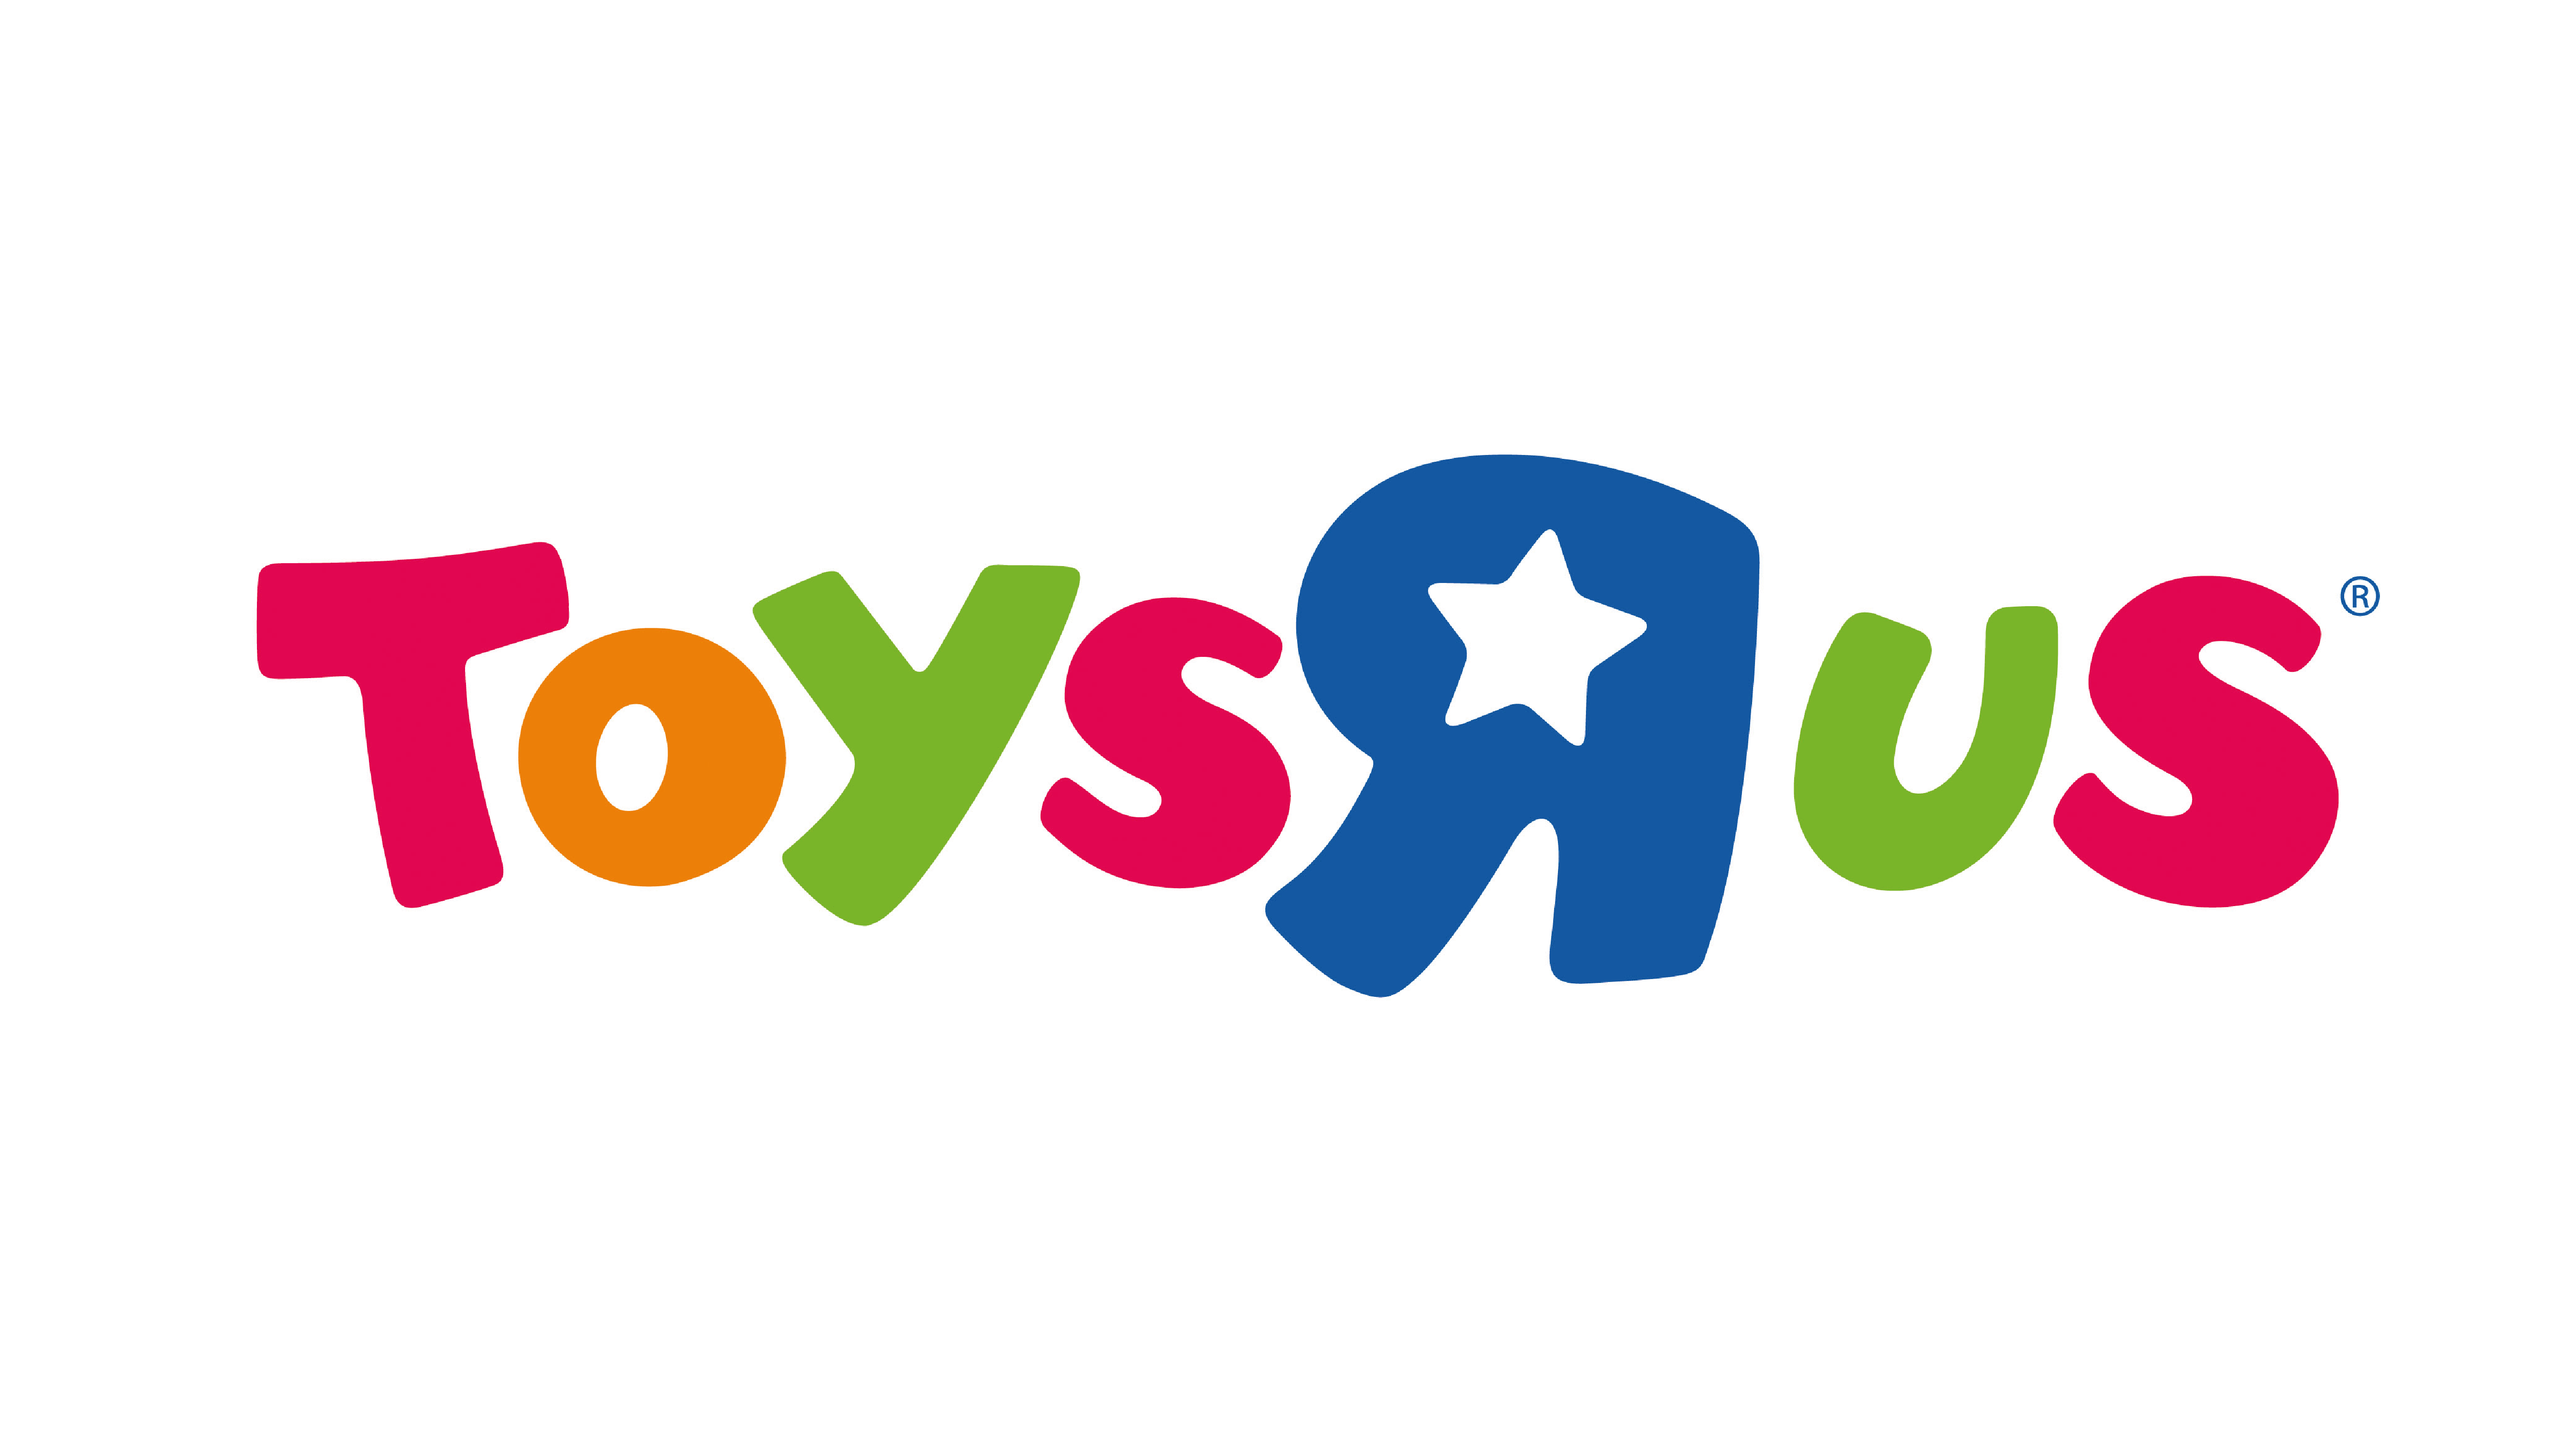 Toys 4 us. Логотип TOYSRUS. Логотип Toys r us. Логотип магазина игрушек. Детский магазин игрушек лого.